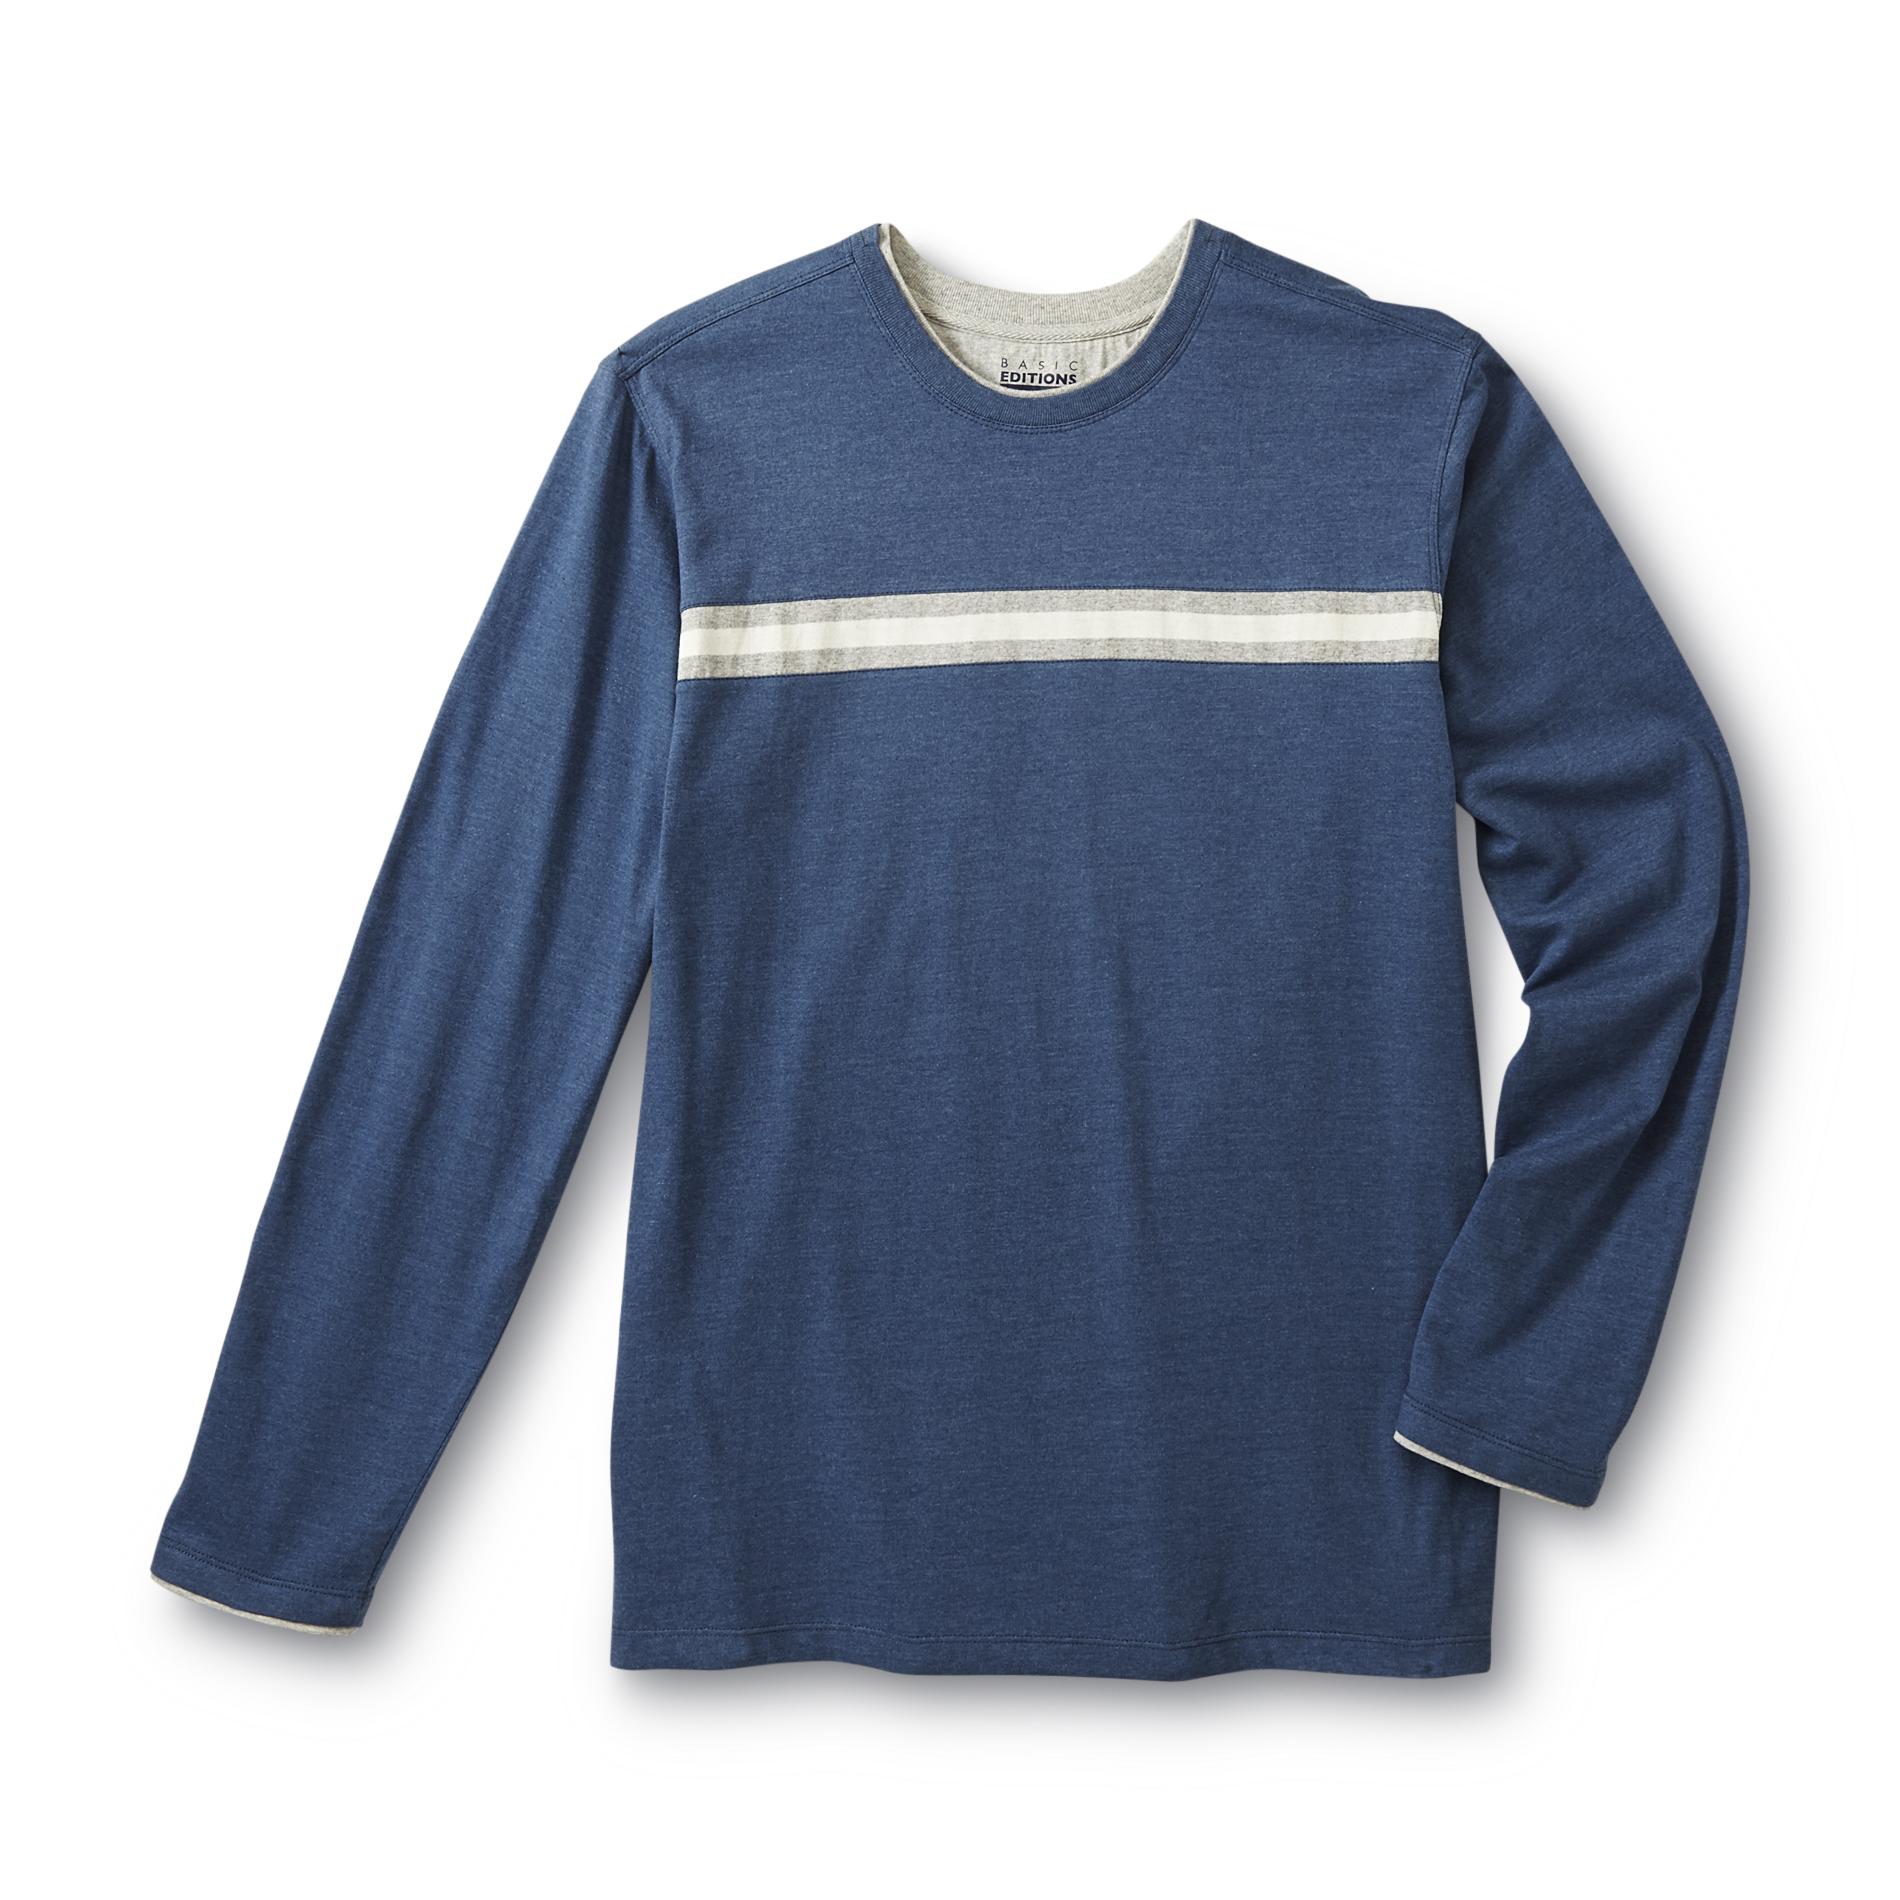 Basic Editions Men's Layered Look Long-Sleeve T-Shirt - Stripe